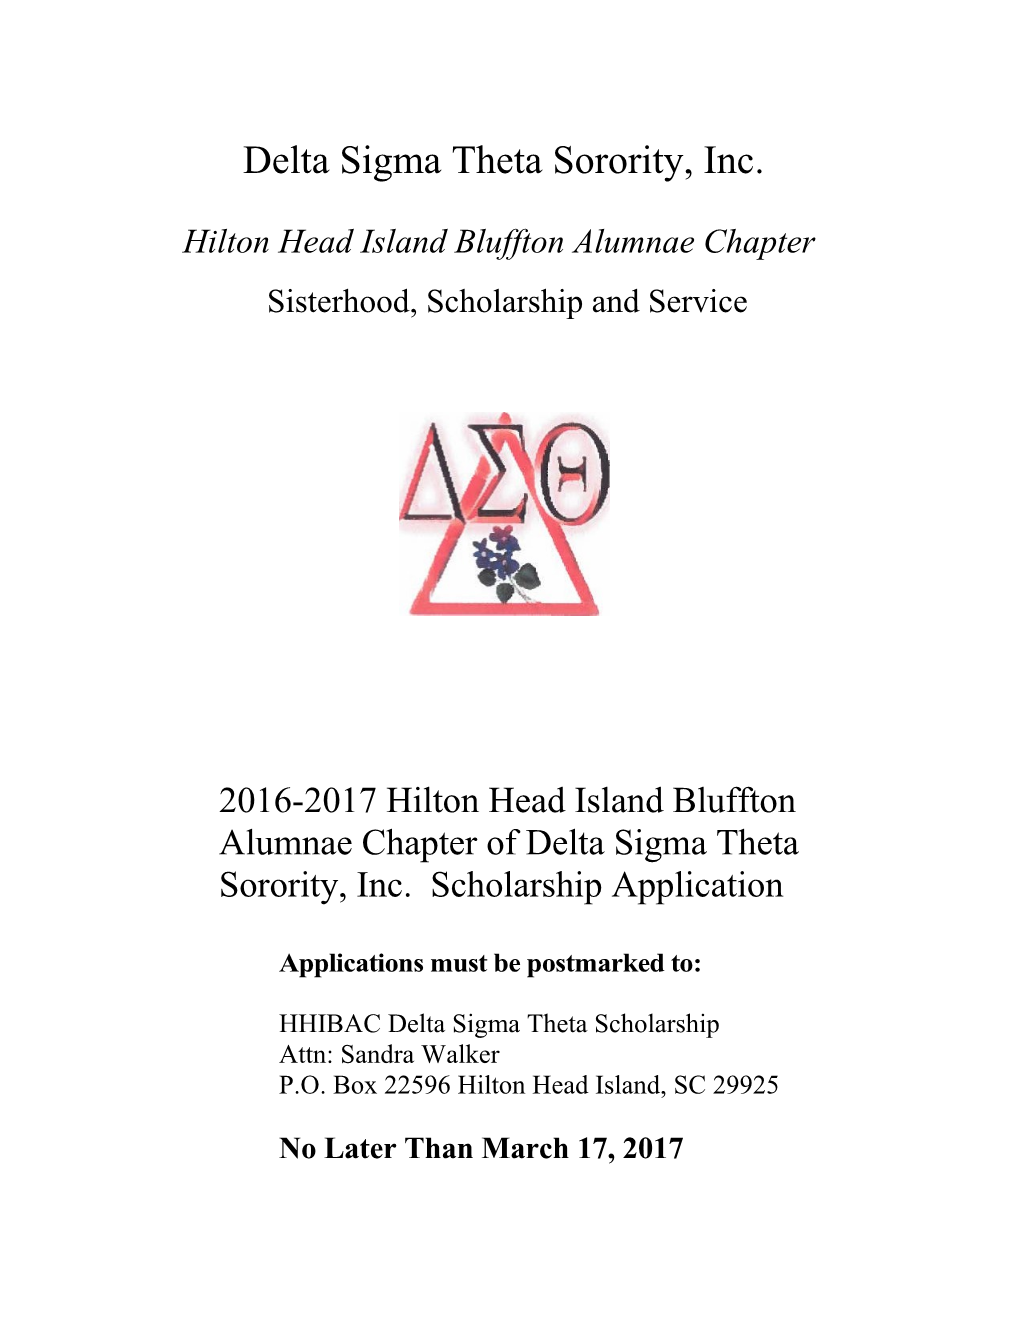 Delta Sigma Theta Sorority, Inc s7